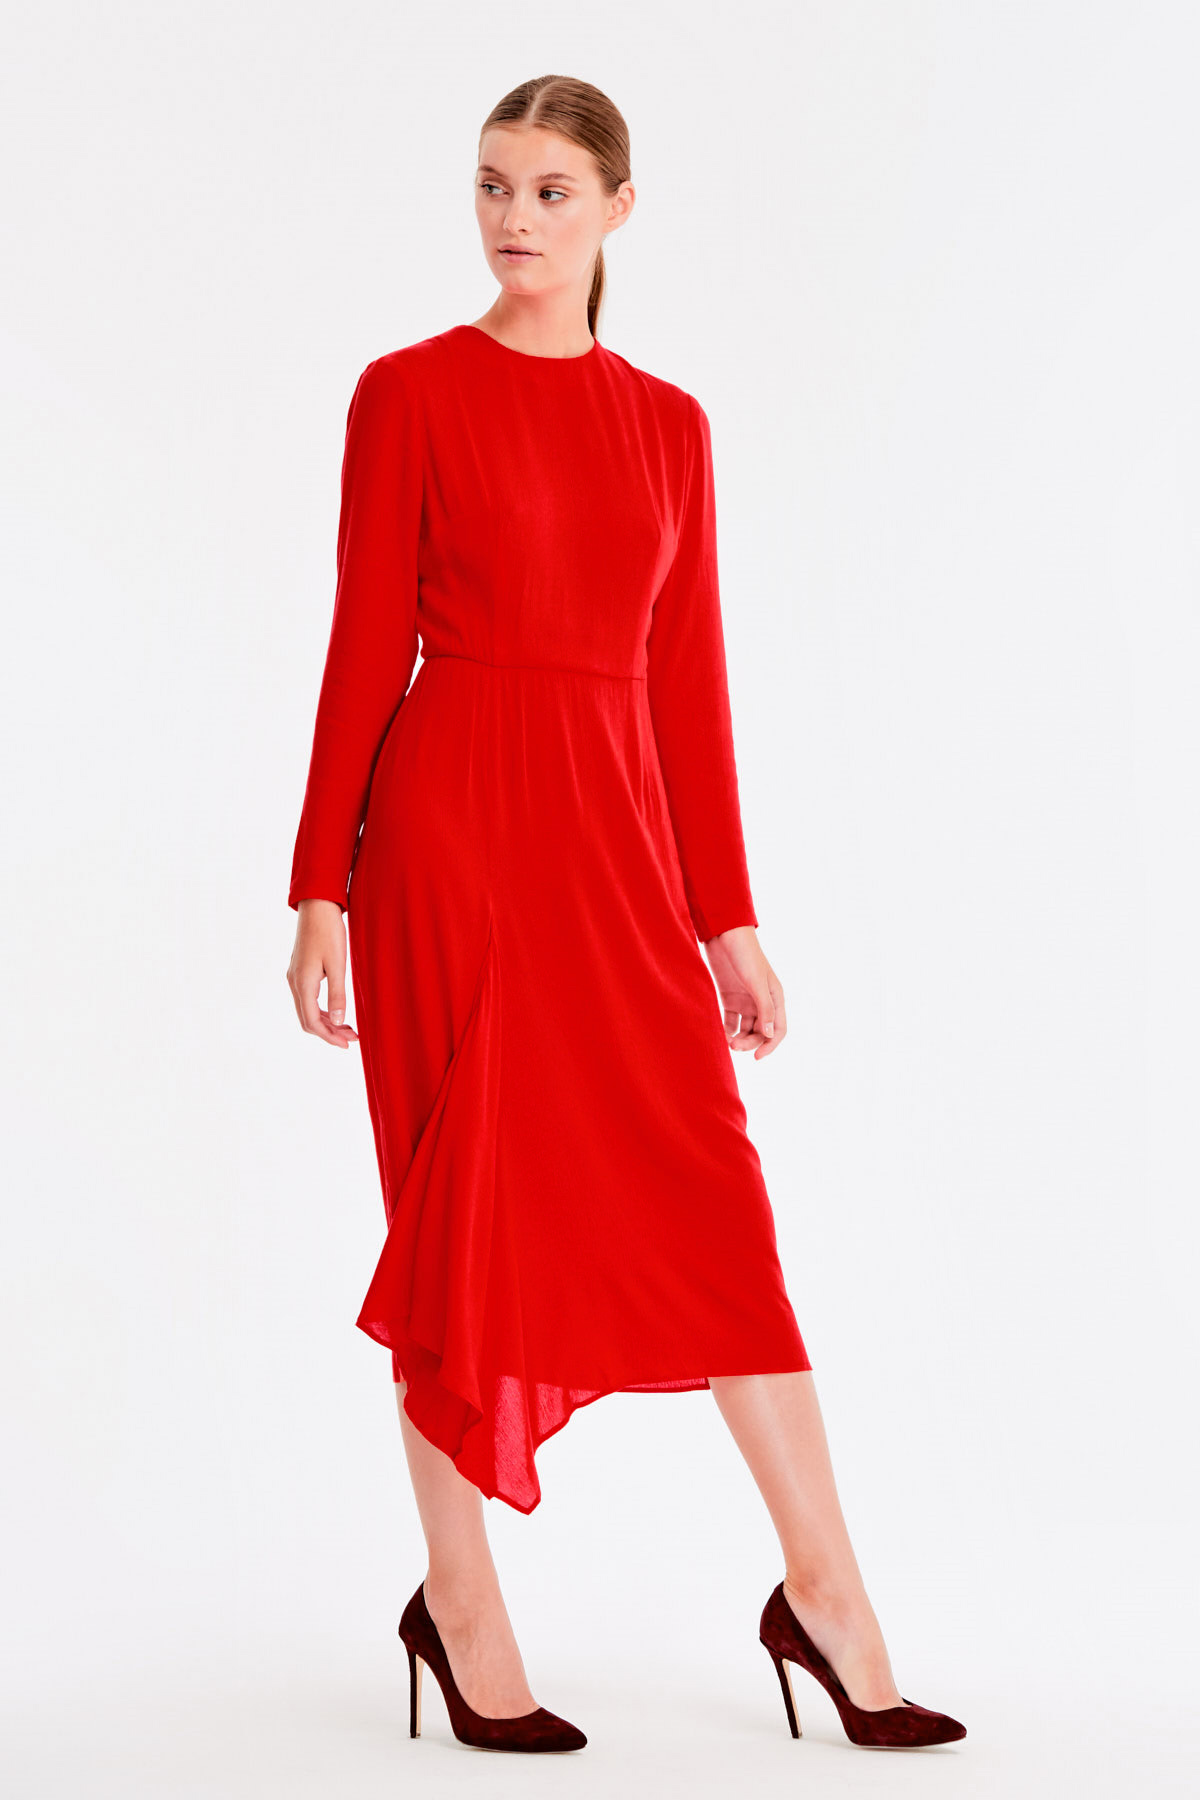 Midi red dress , photo 7